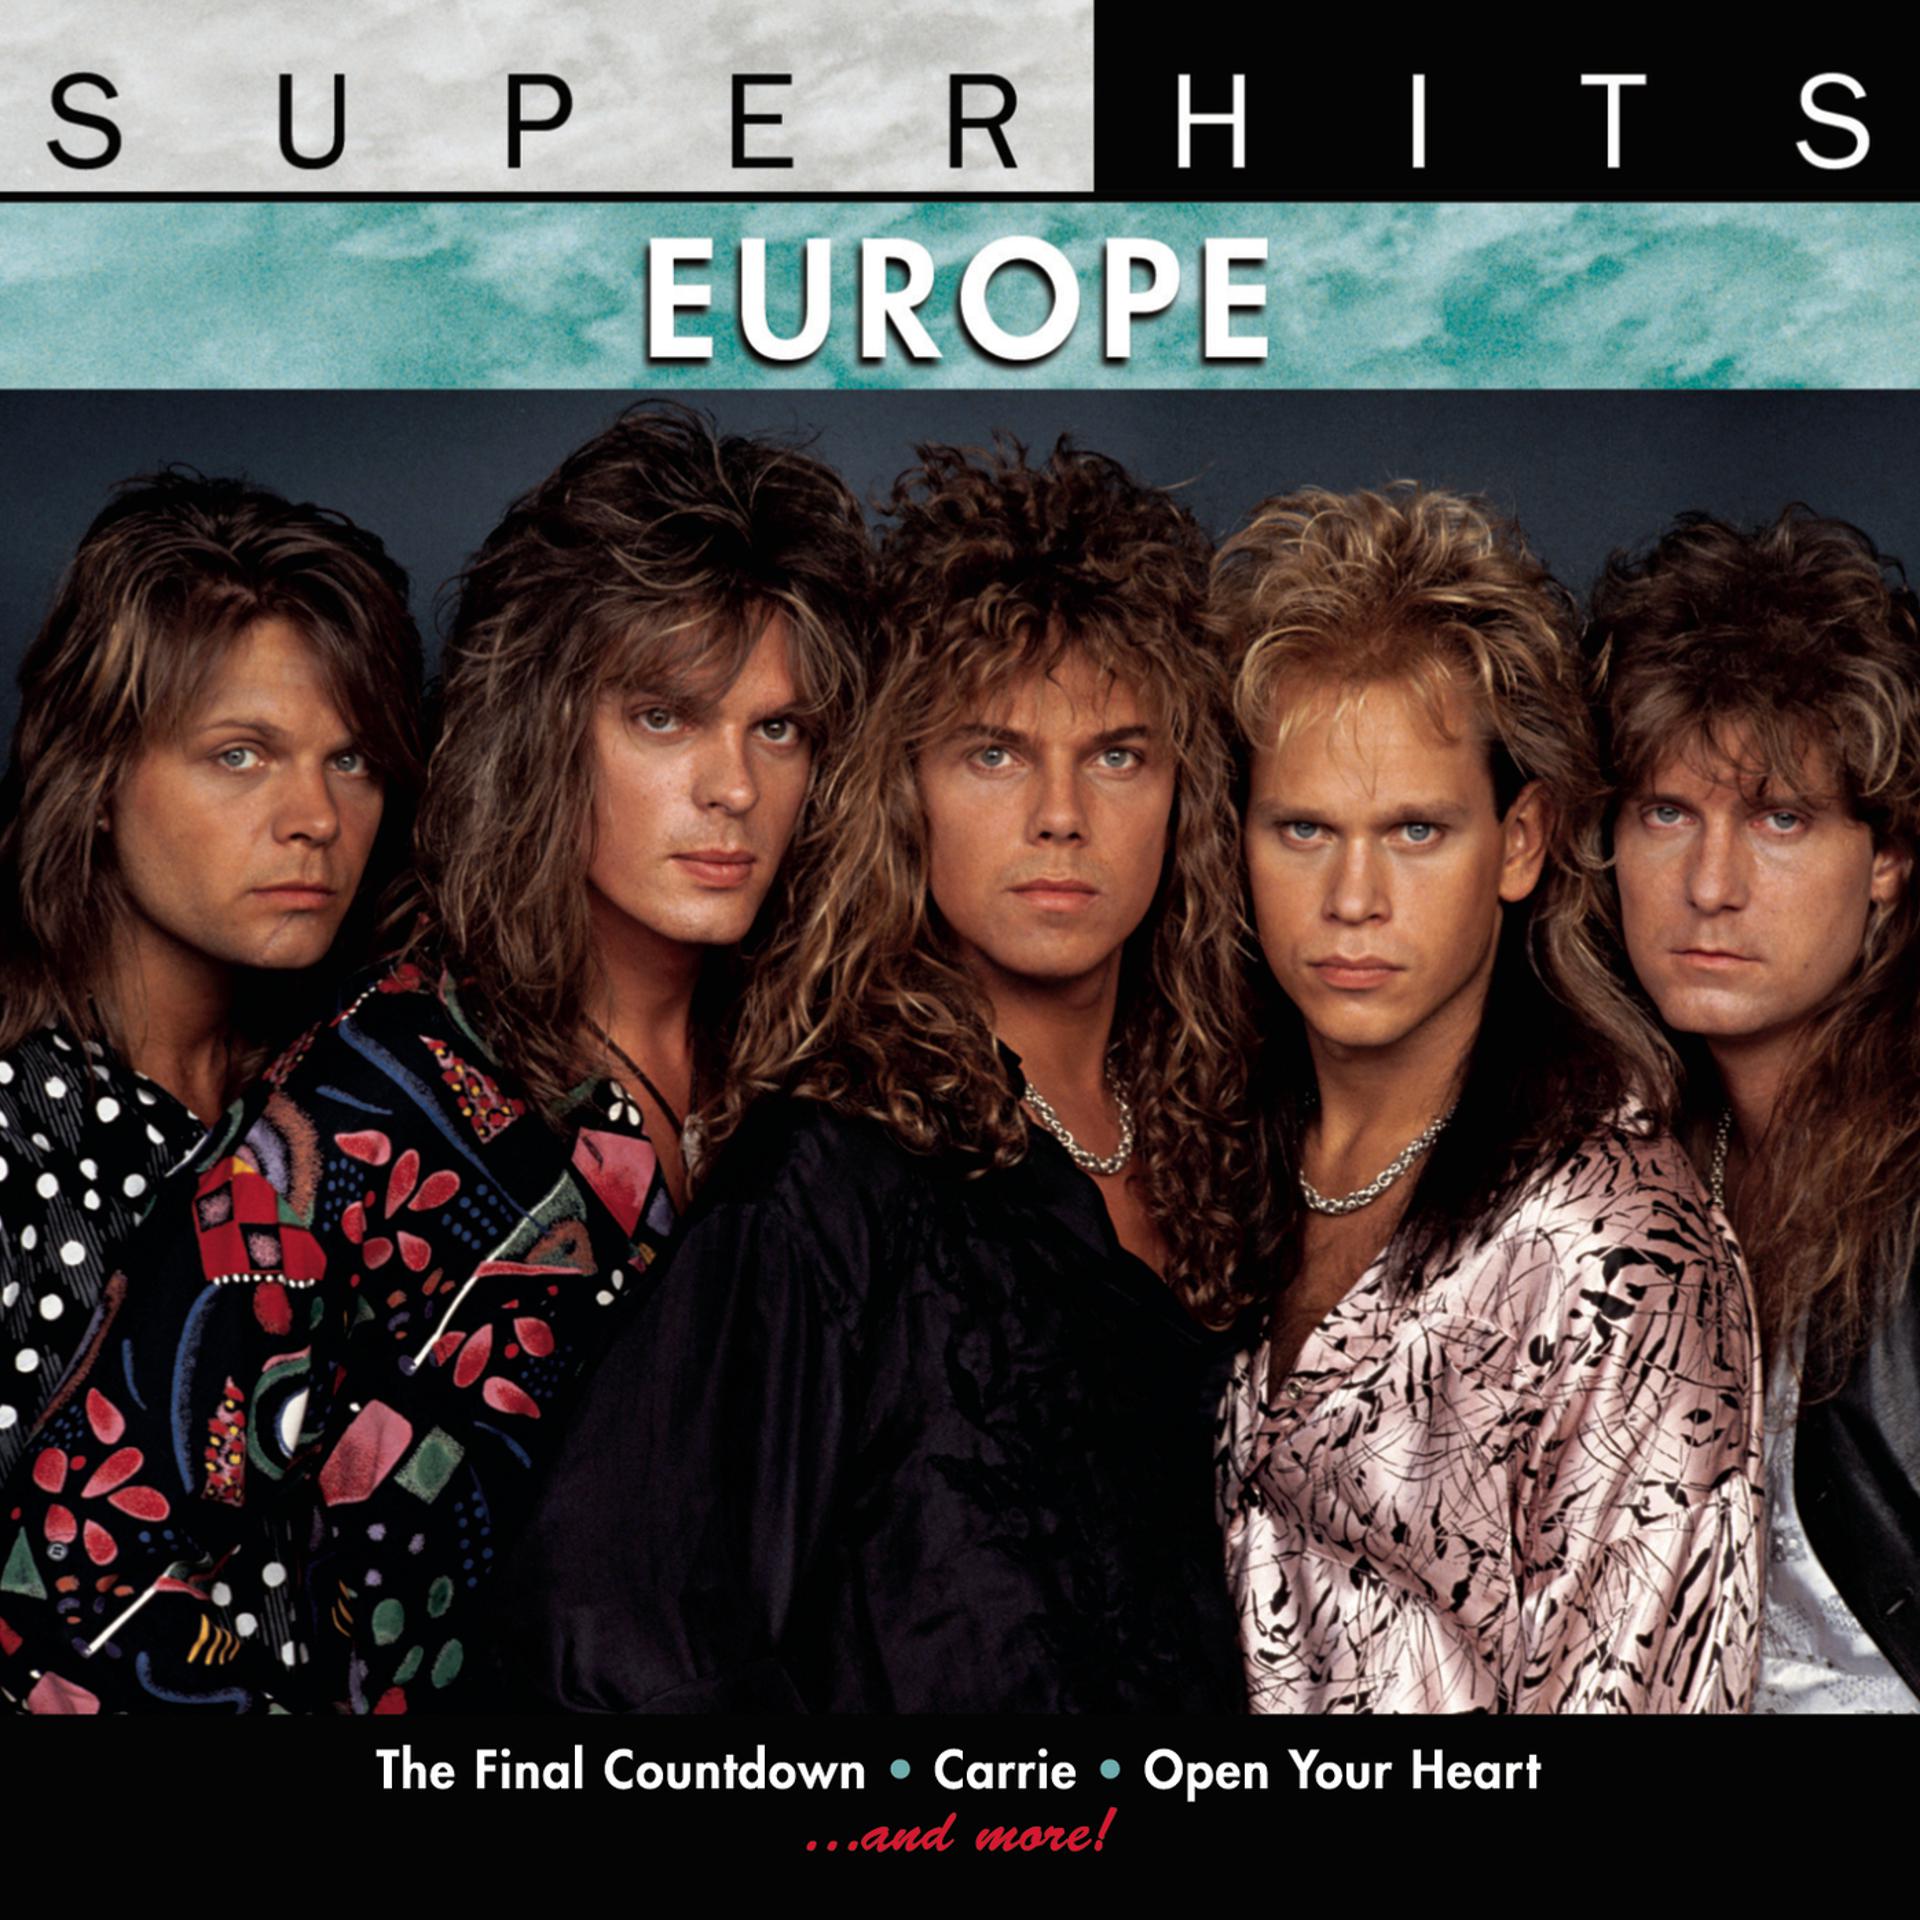 Европа файнал каунтдаун. Europe группа 1986. Europa группа the Final Countdown. Europe Band обложки. Europe the Final Countdown обложка.